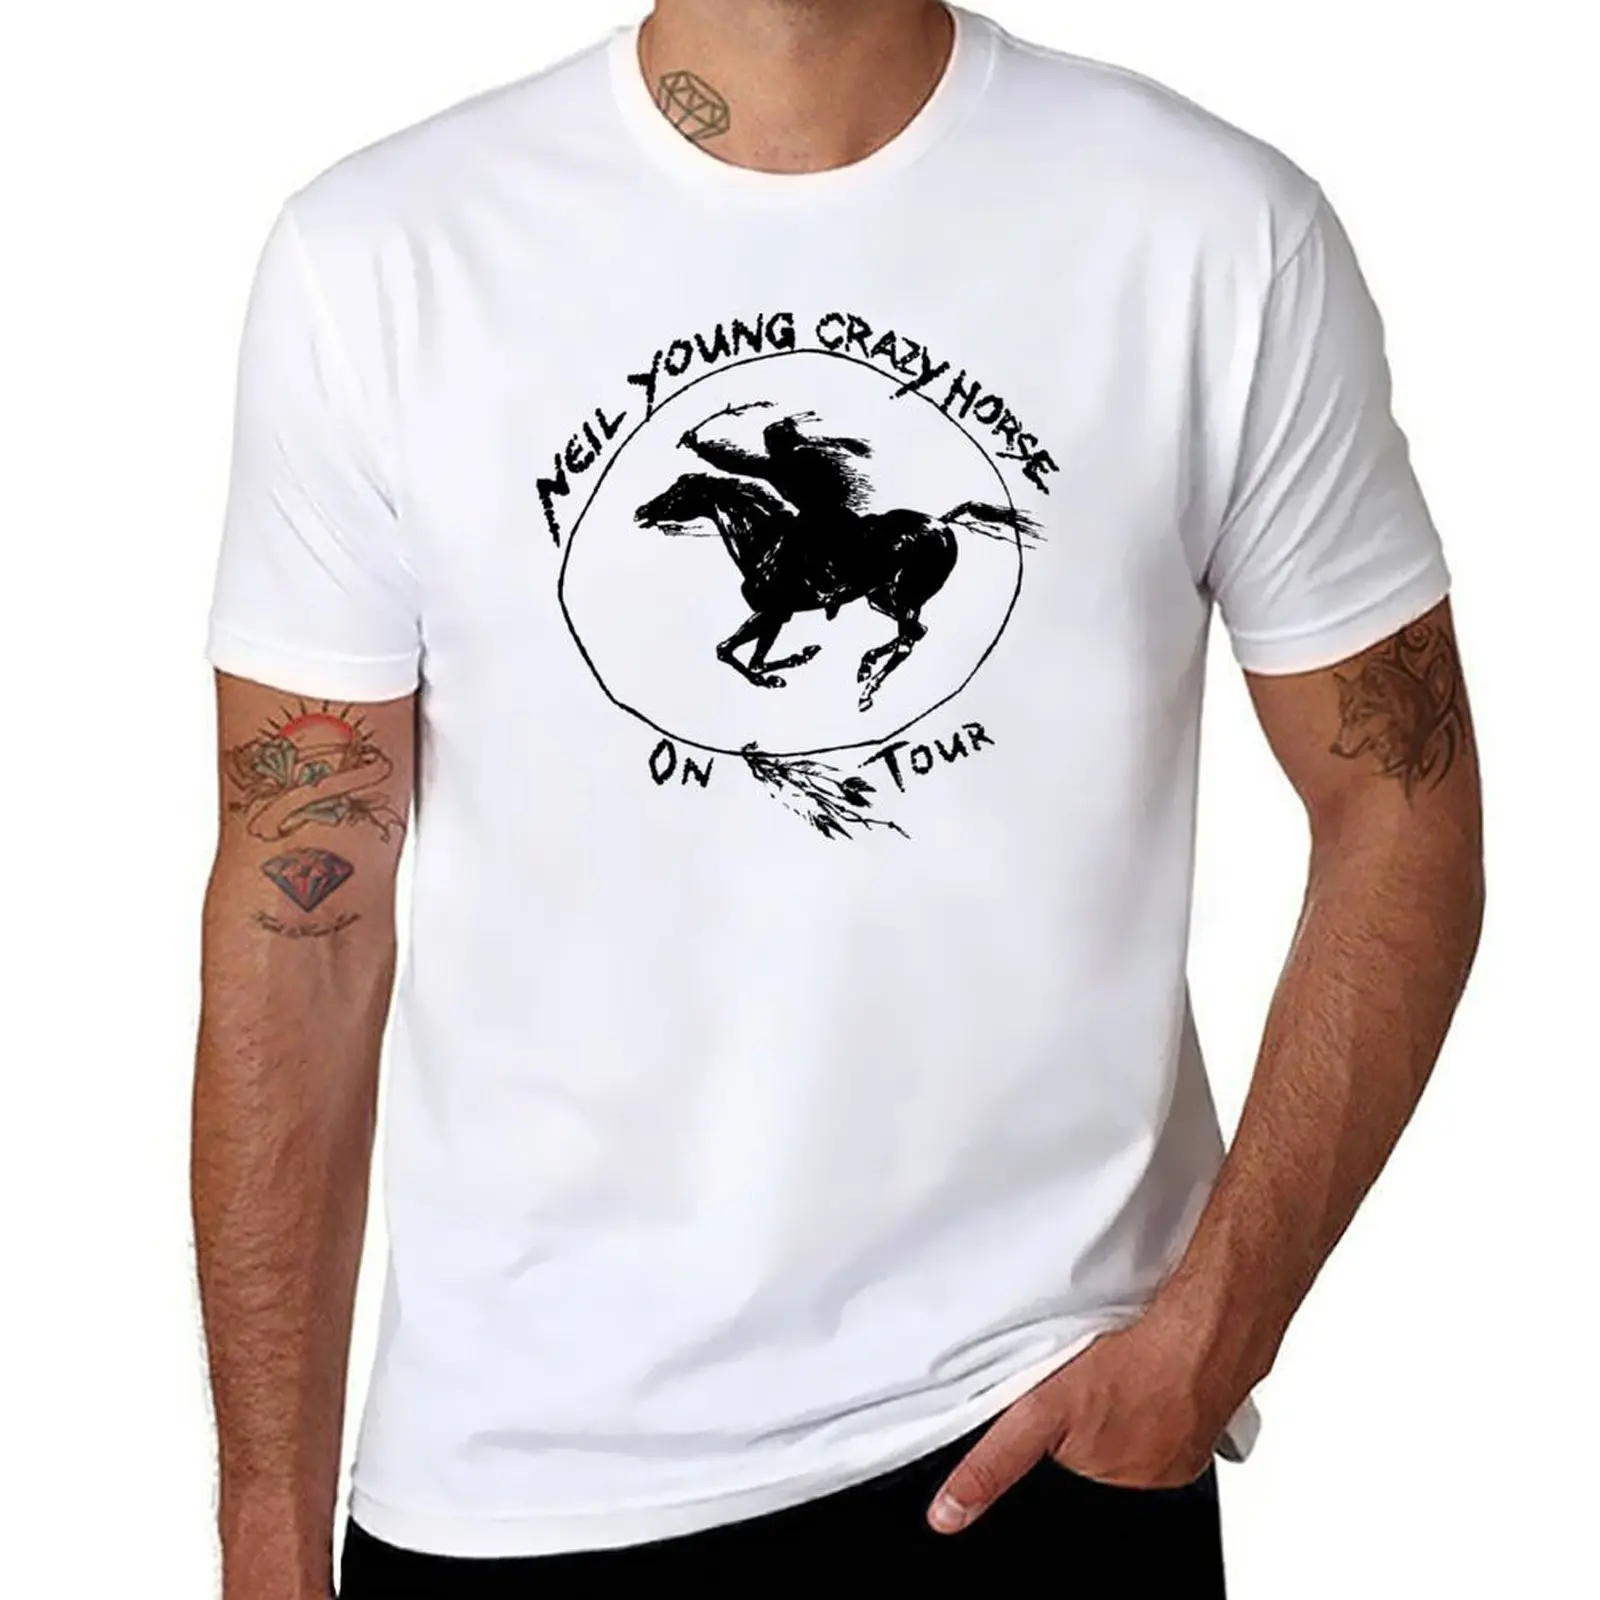 

New Ride A Horse Art -Young Doodles On Tour Classic T-Shirt plain t-shirt man clothes Men's t shirts